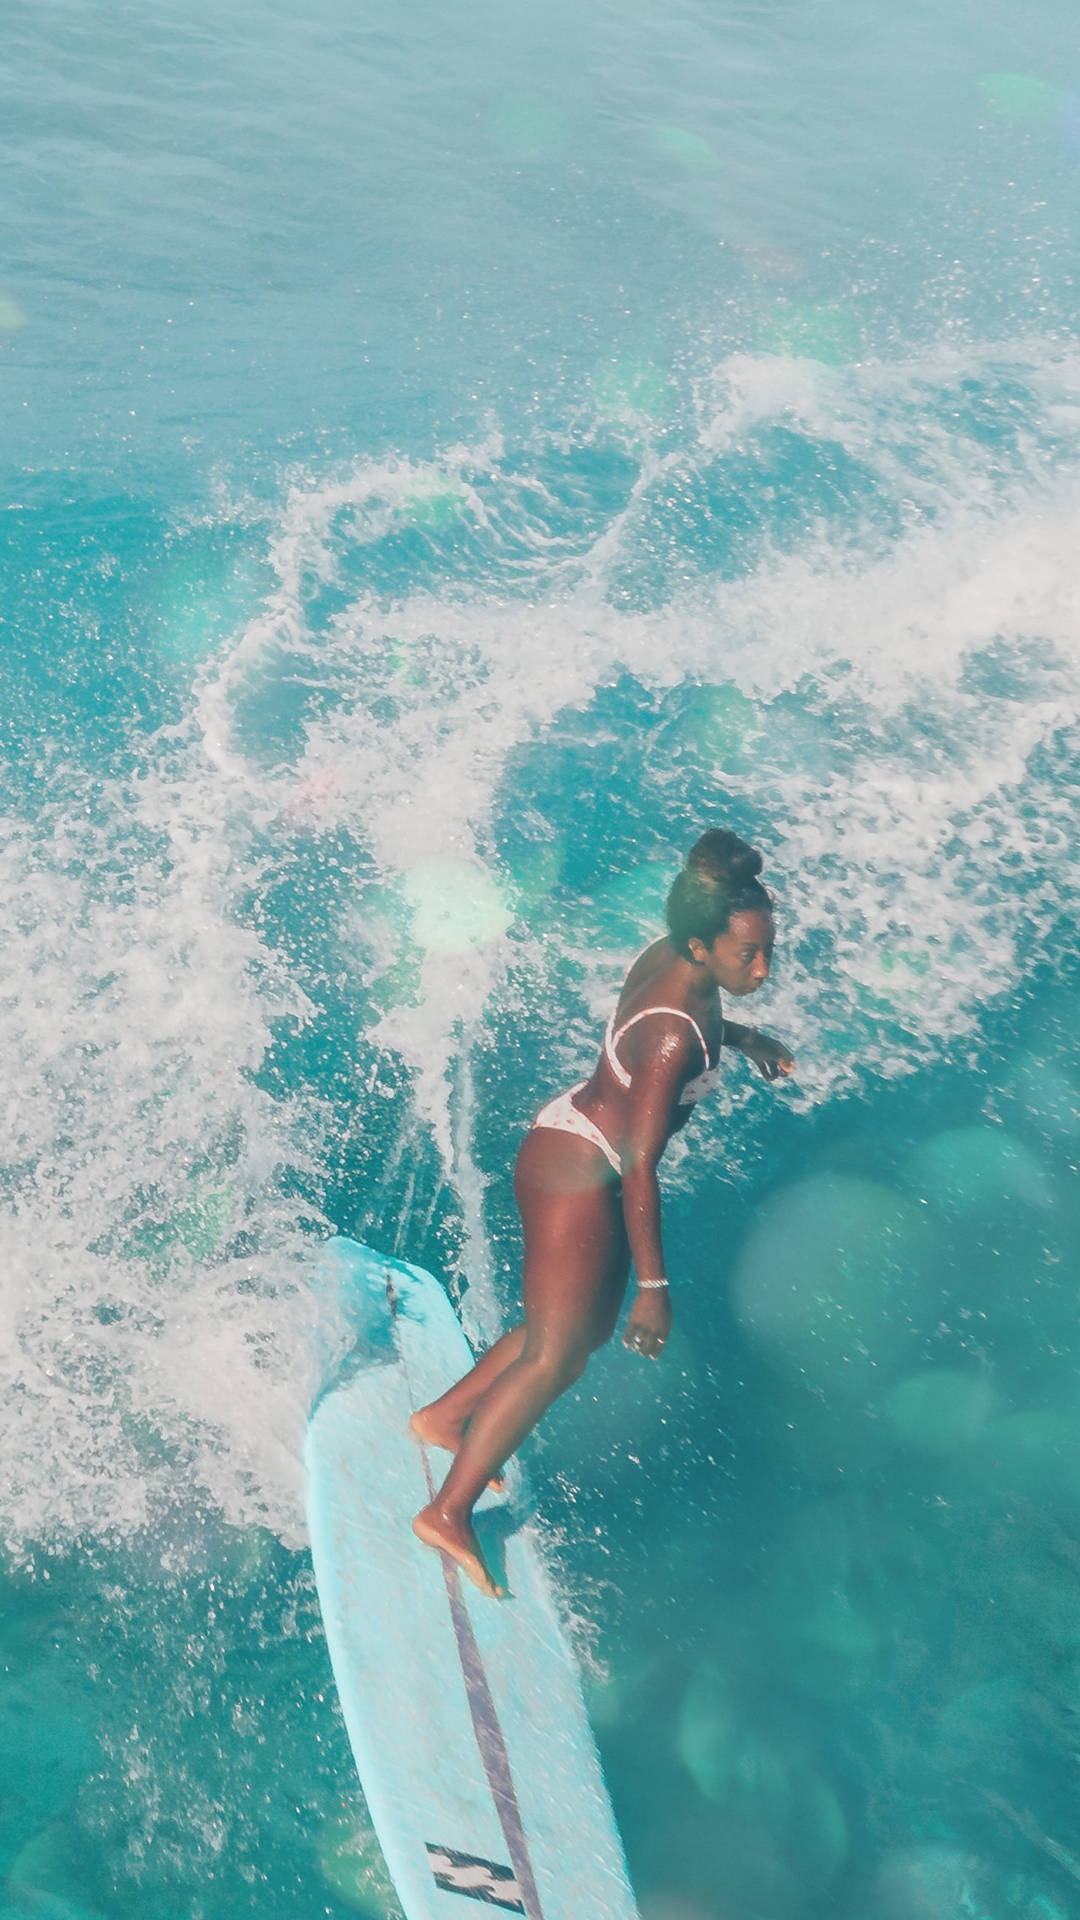 Girl Surfing On Blue Board